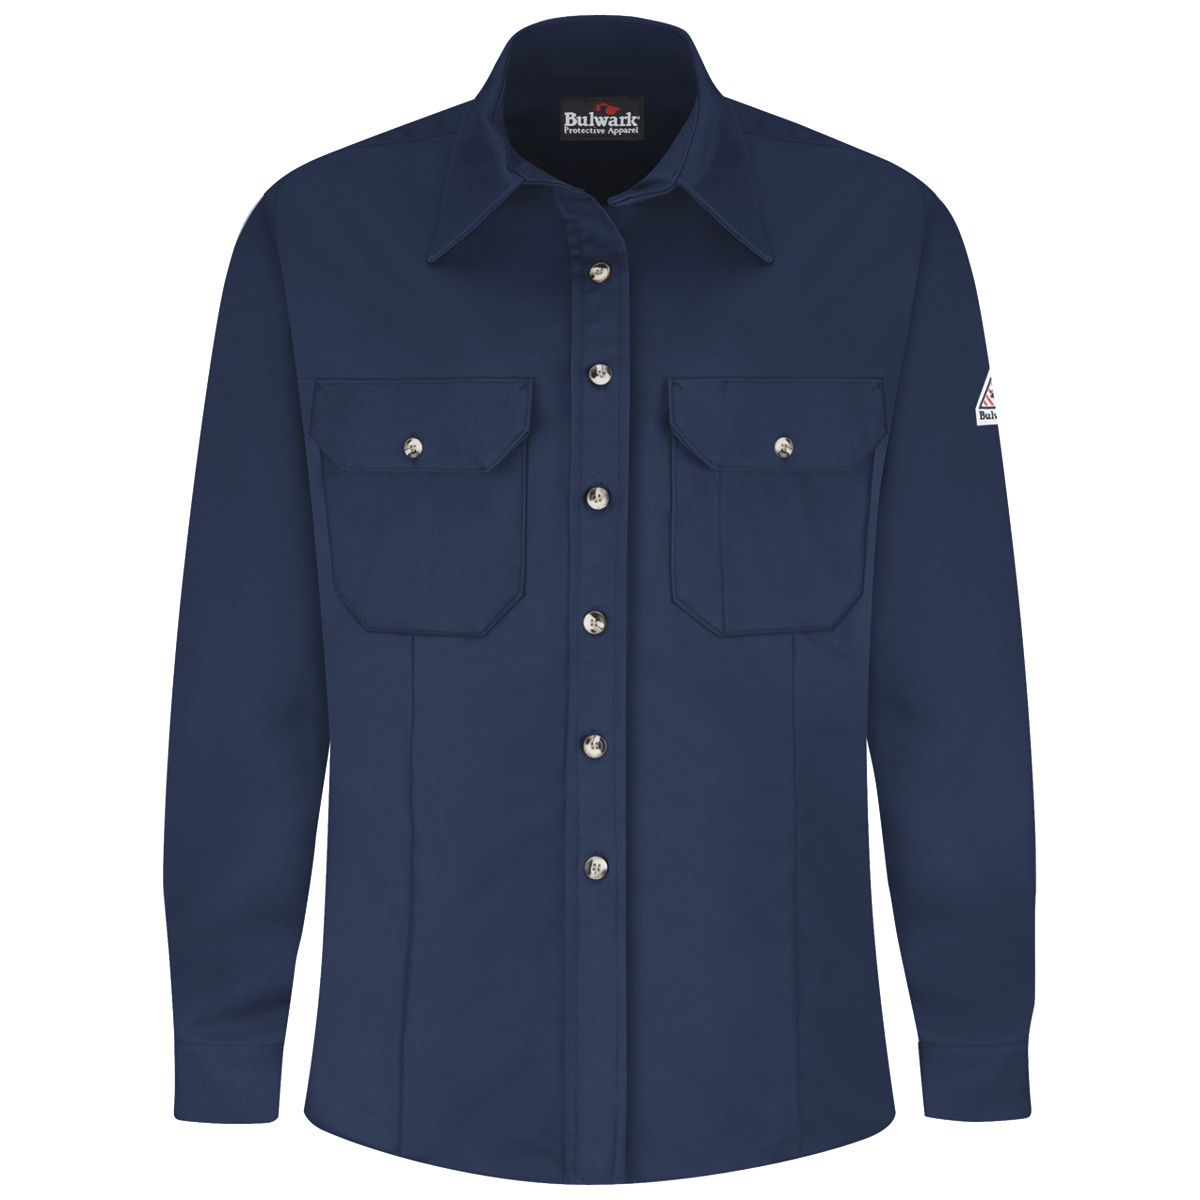 Bulwark® Medium Tall Navy Blue Westex Ultrasoft®/Cotton/Nylon Flame Resistant Dress Shirt With Button Front Closure